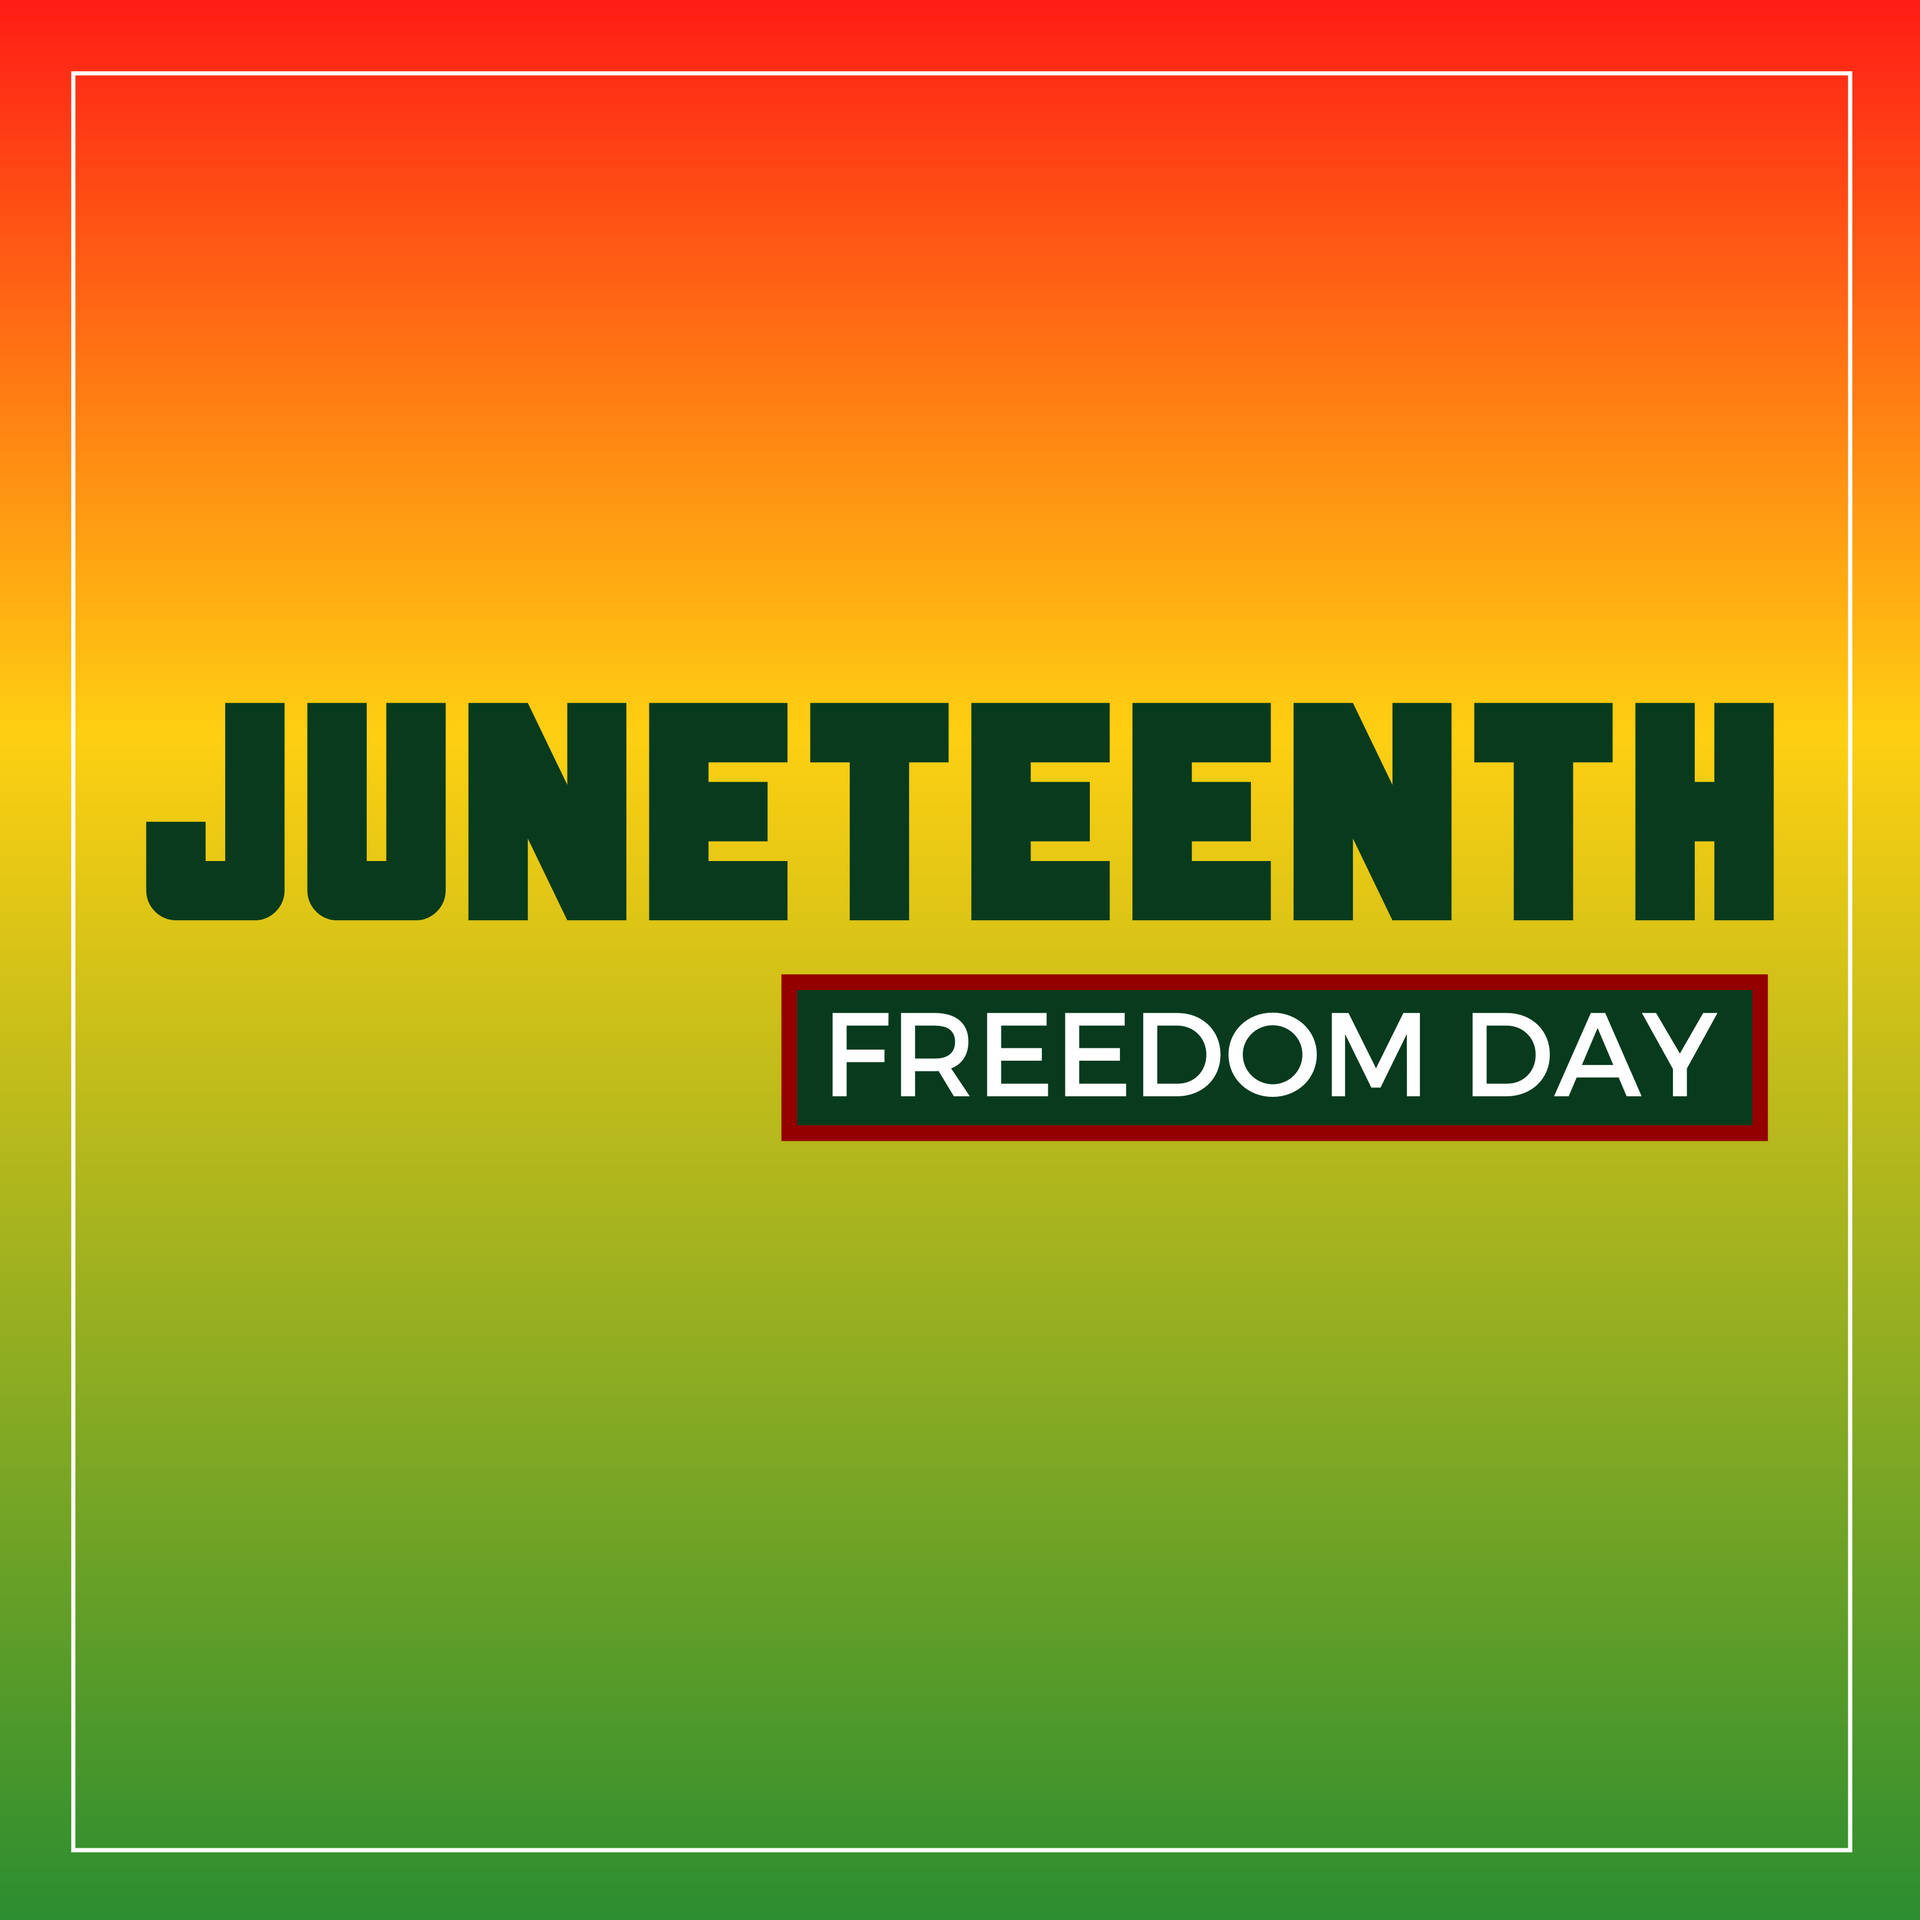 Juneteenth Freedom Day Illustration Background